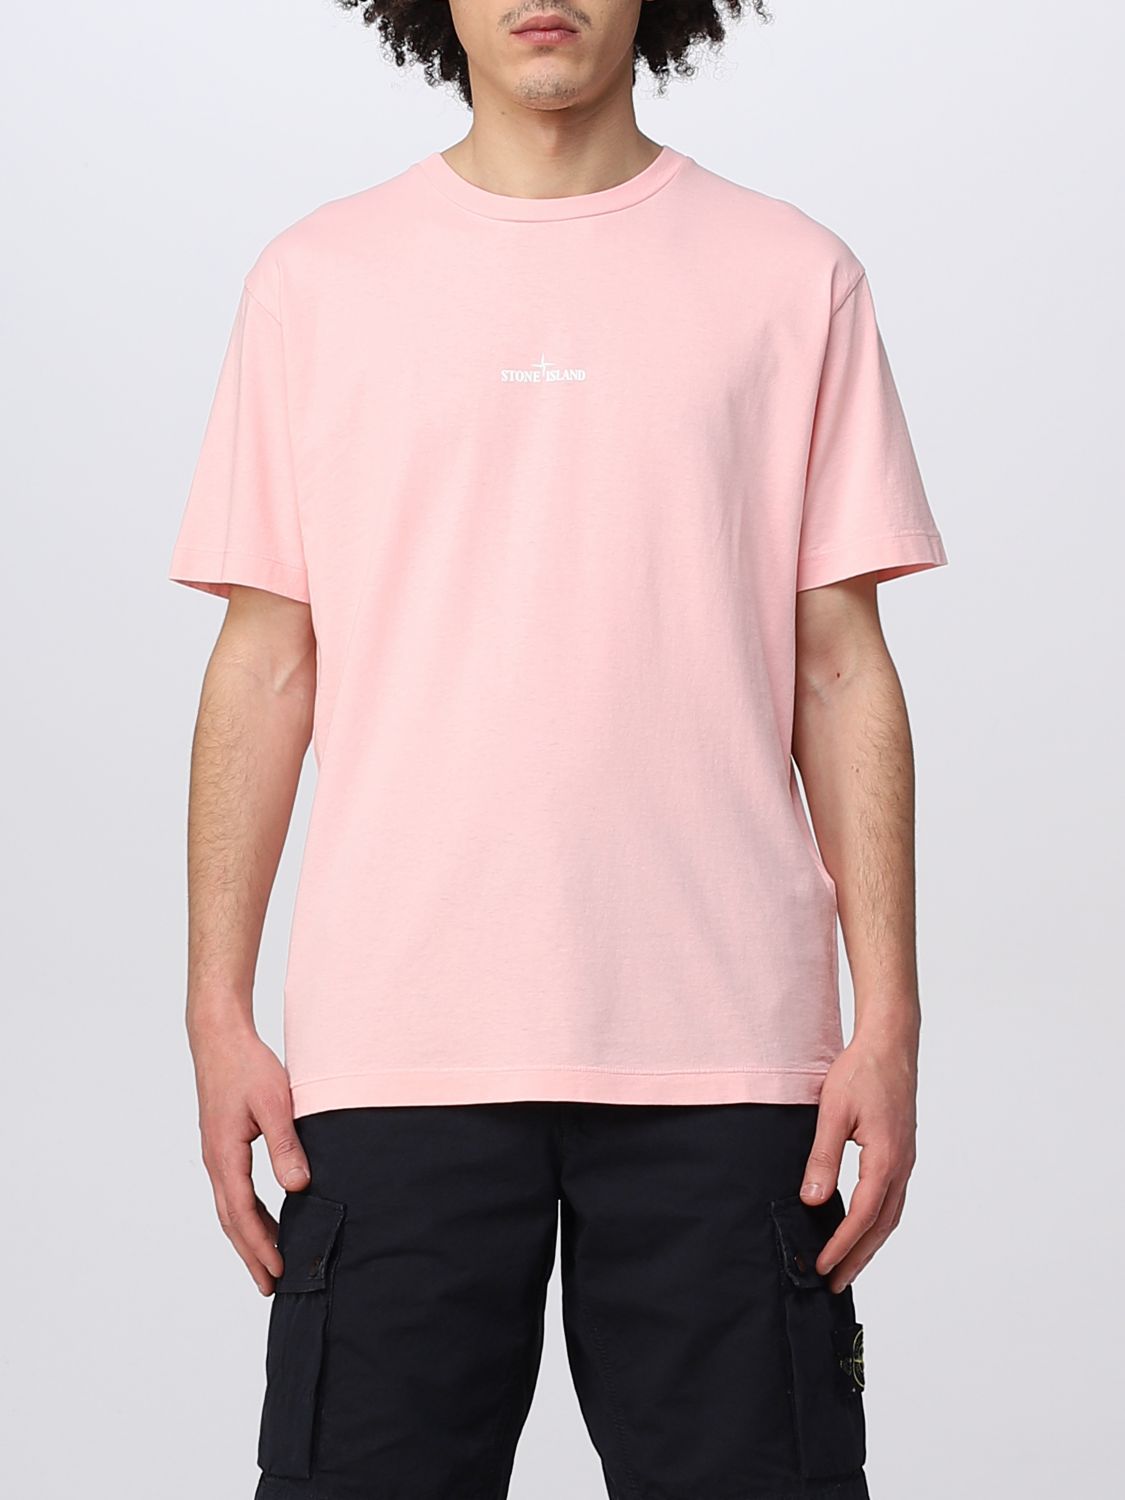 STONE ISLAND: t-shirt for man - Pink | Stone Island t-shirt 78152NS89 ...